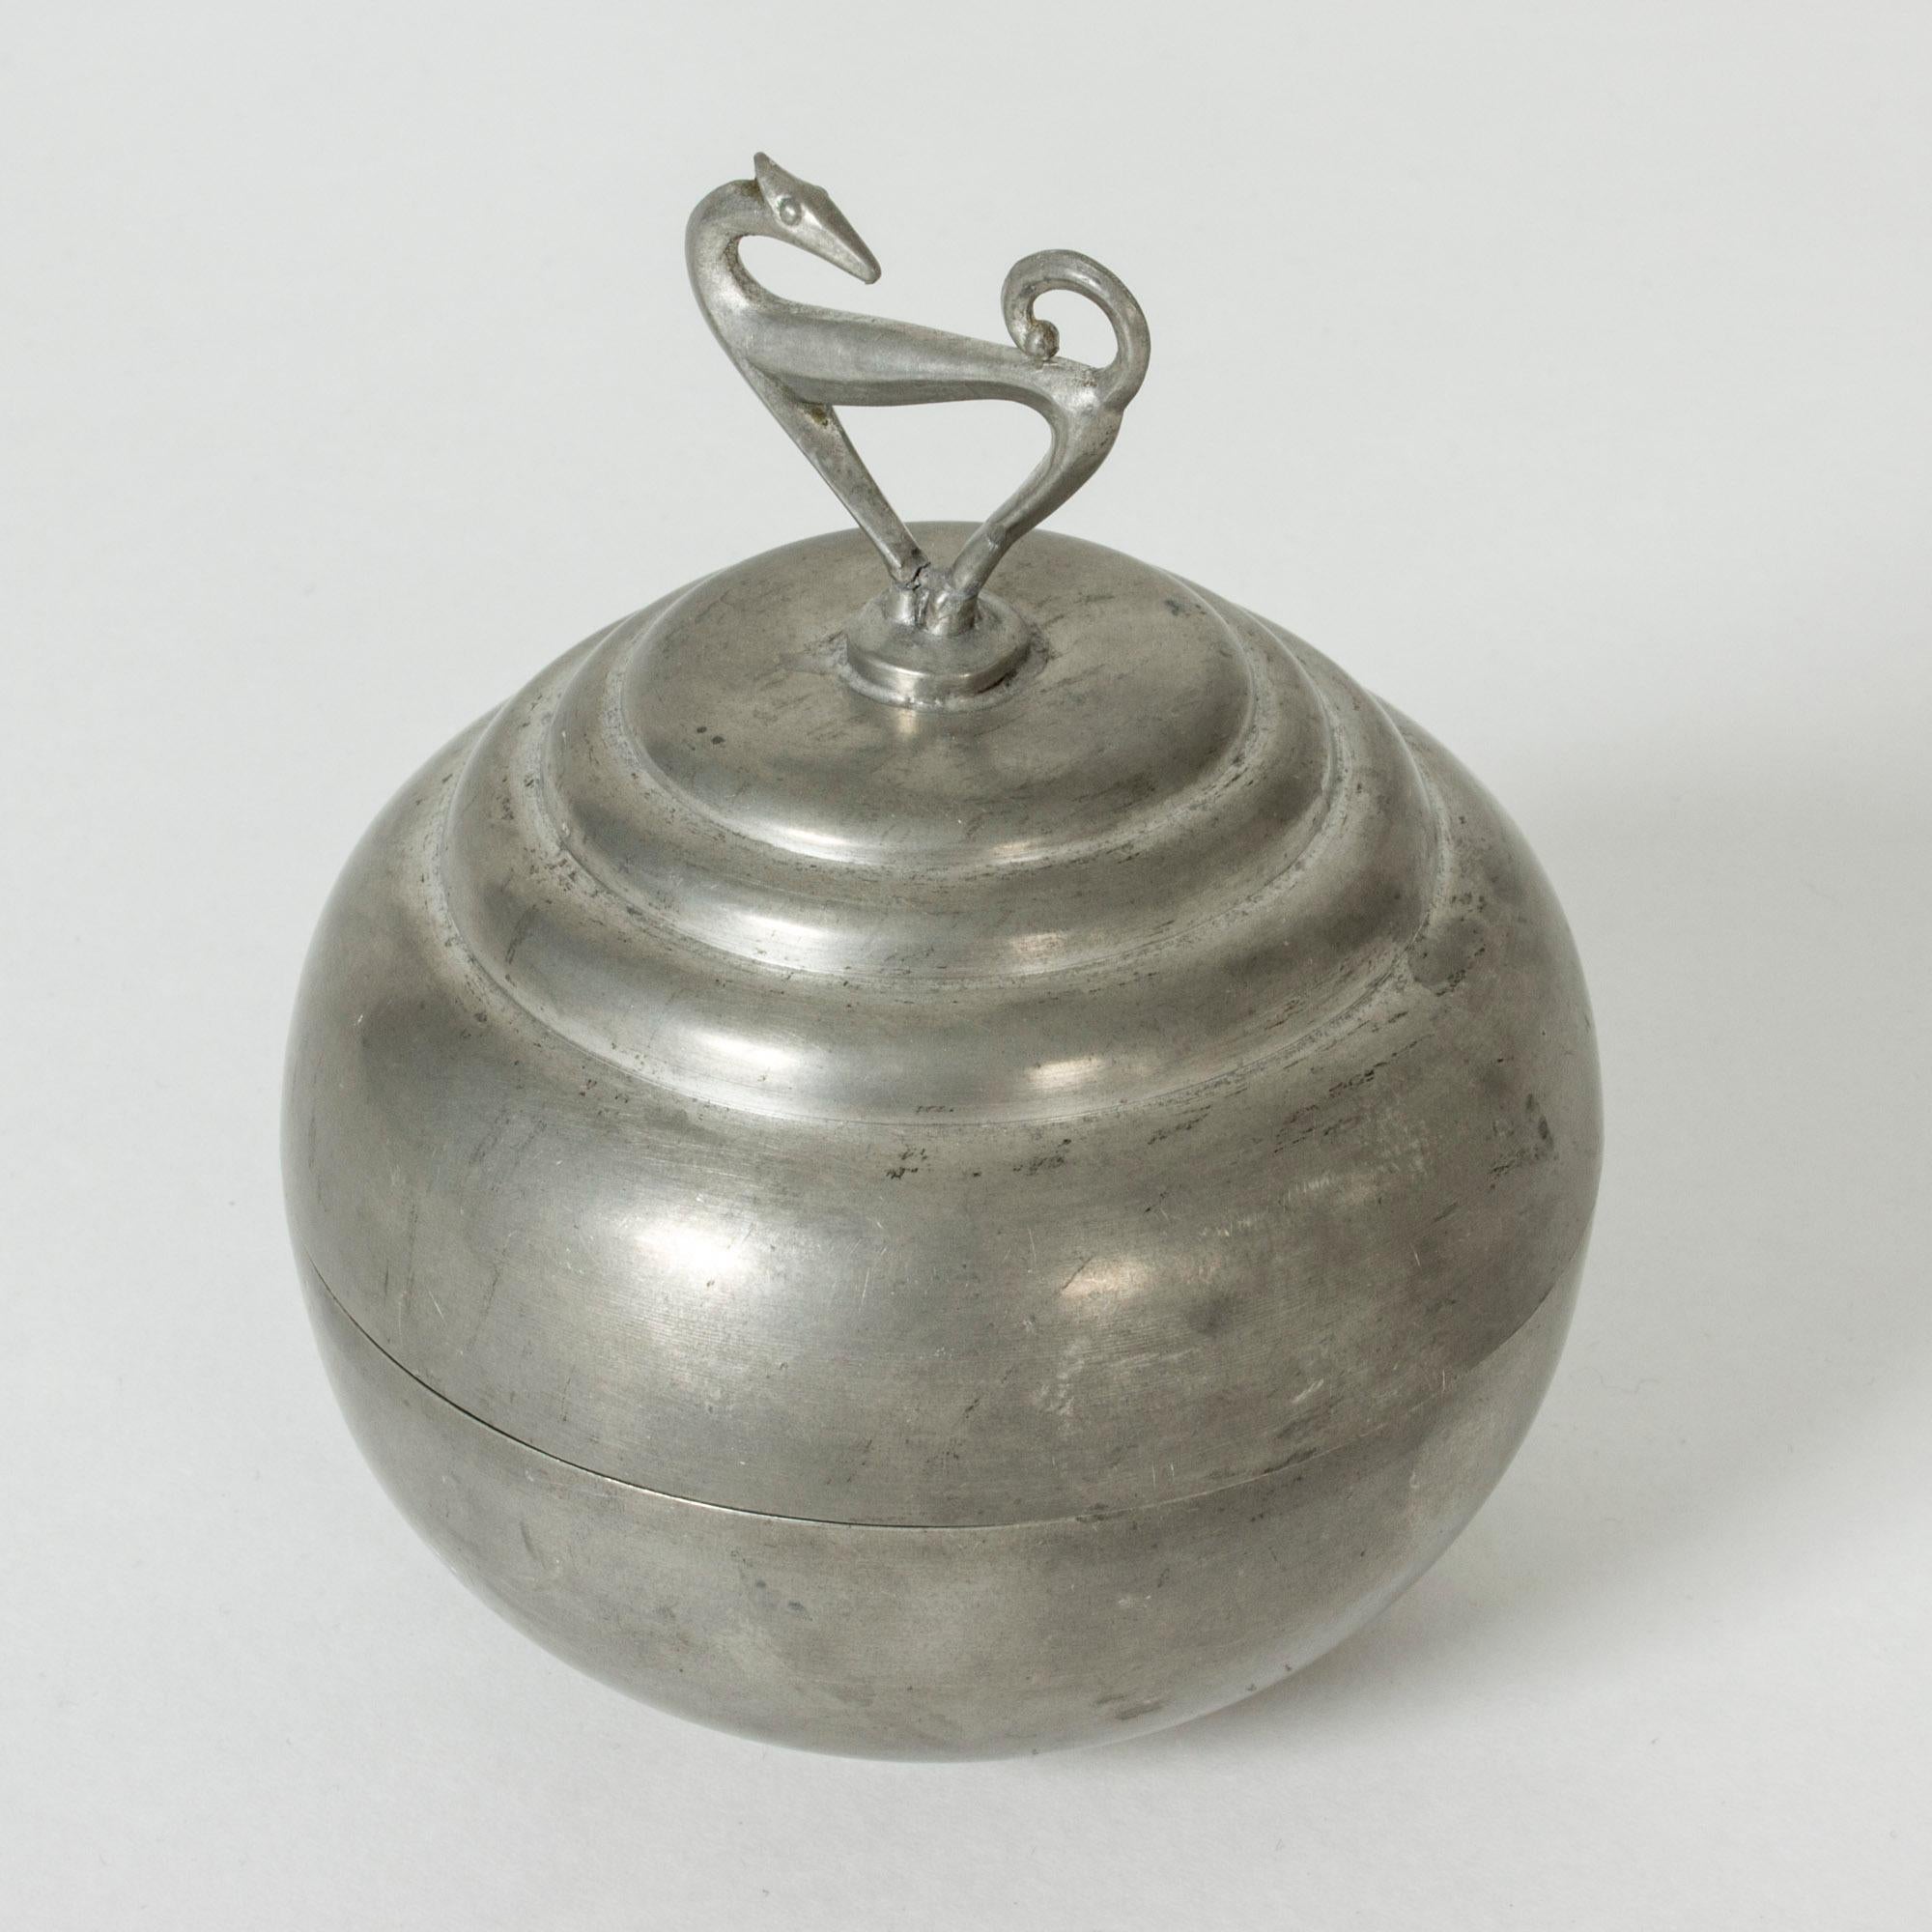 Scandinavian Modern Pewter Swedish Modern Jar by Sylvia Stave for C. G. Hallberg, 1933